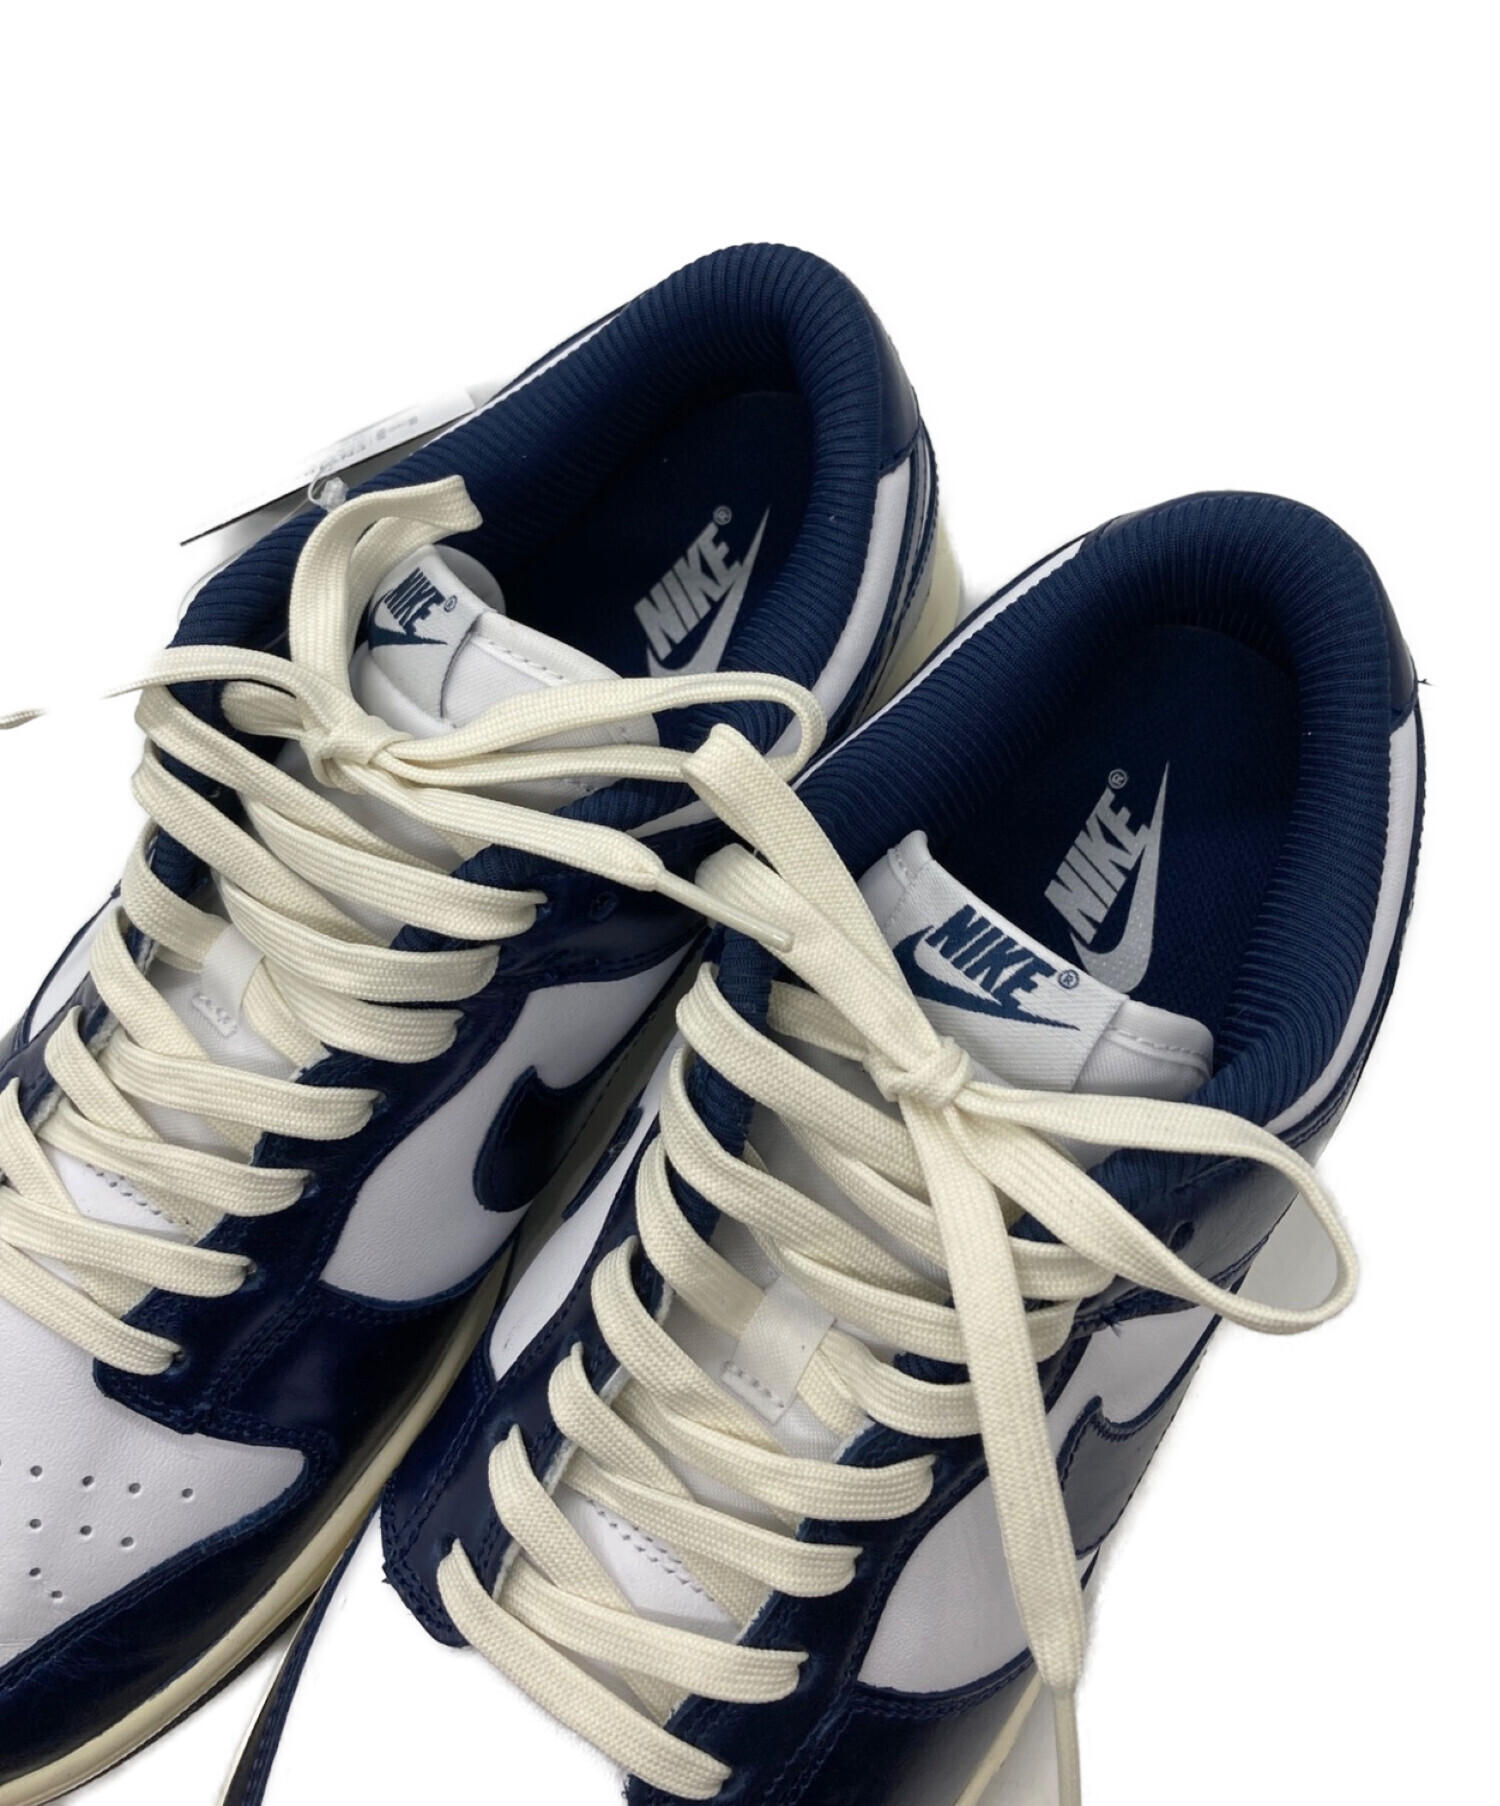 Nike Dunk Low "Valerian Blue" 29cm